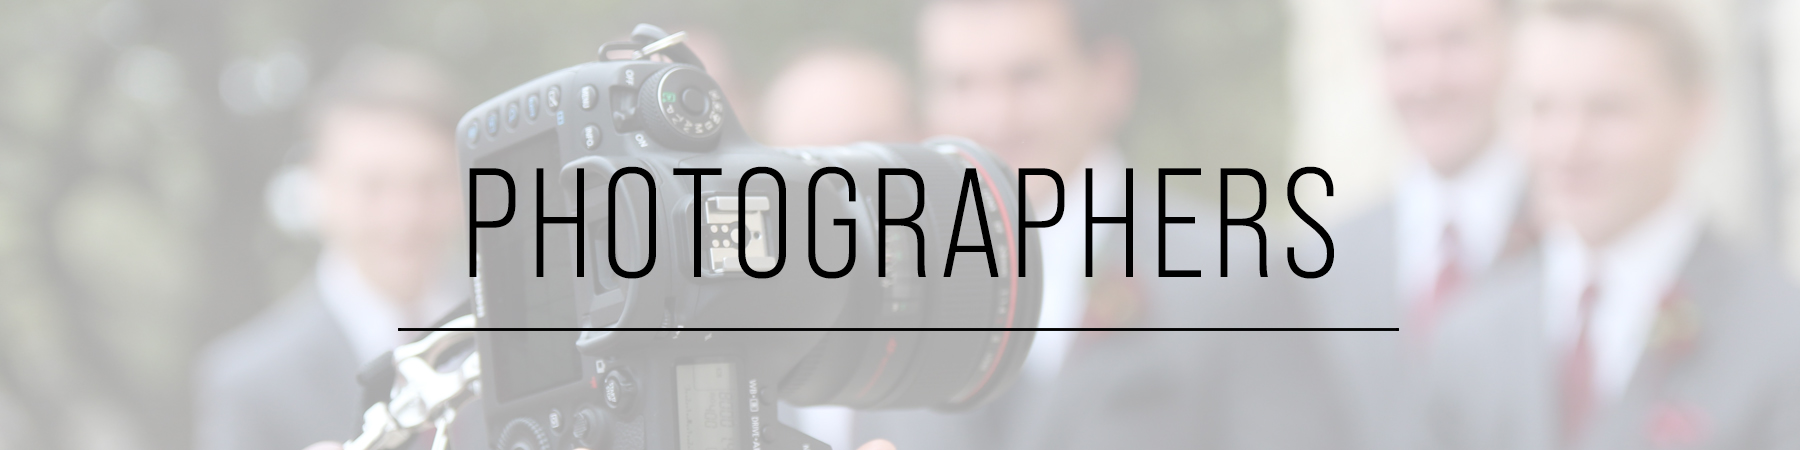 PHOTOGRAPHERS_header